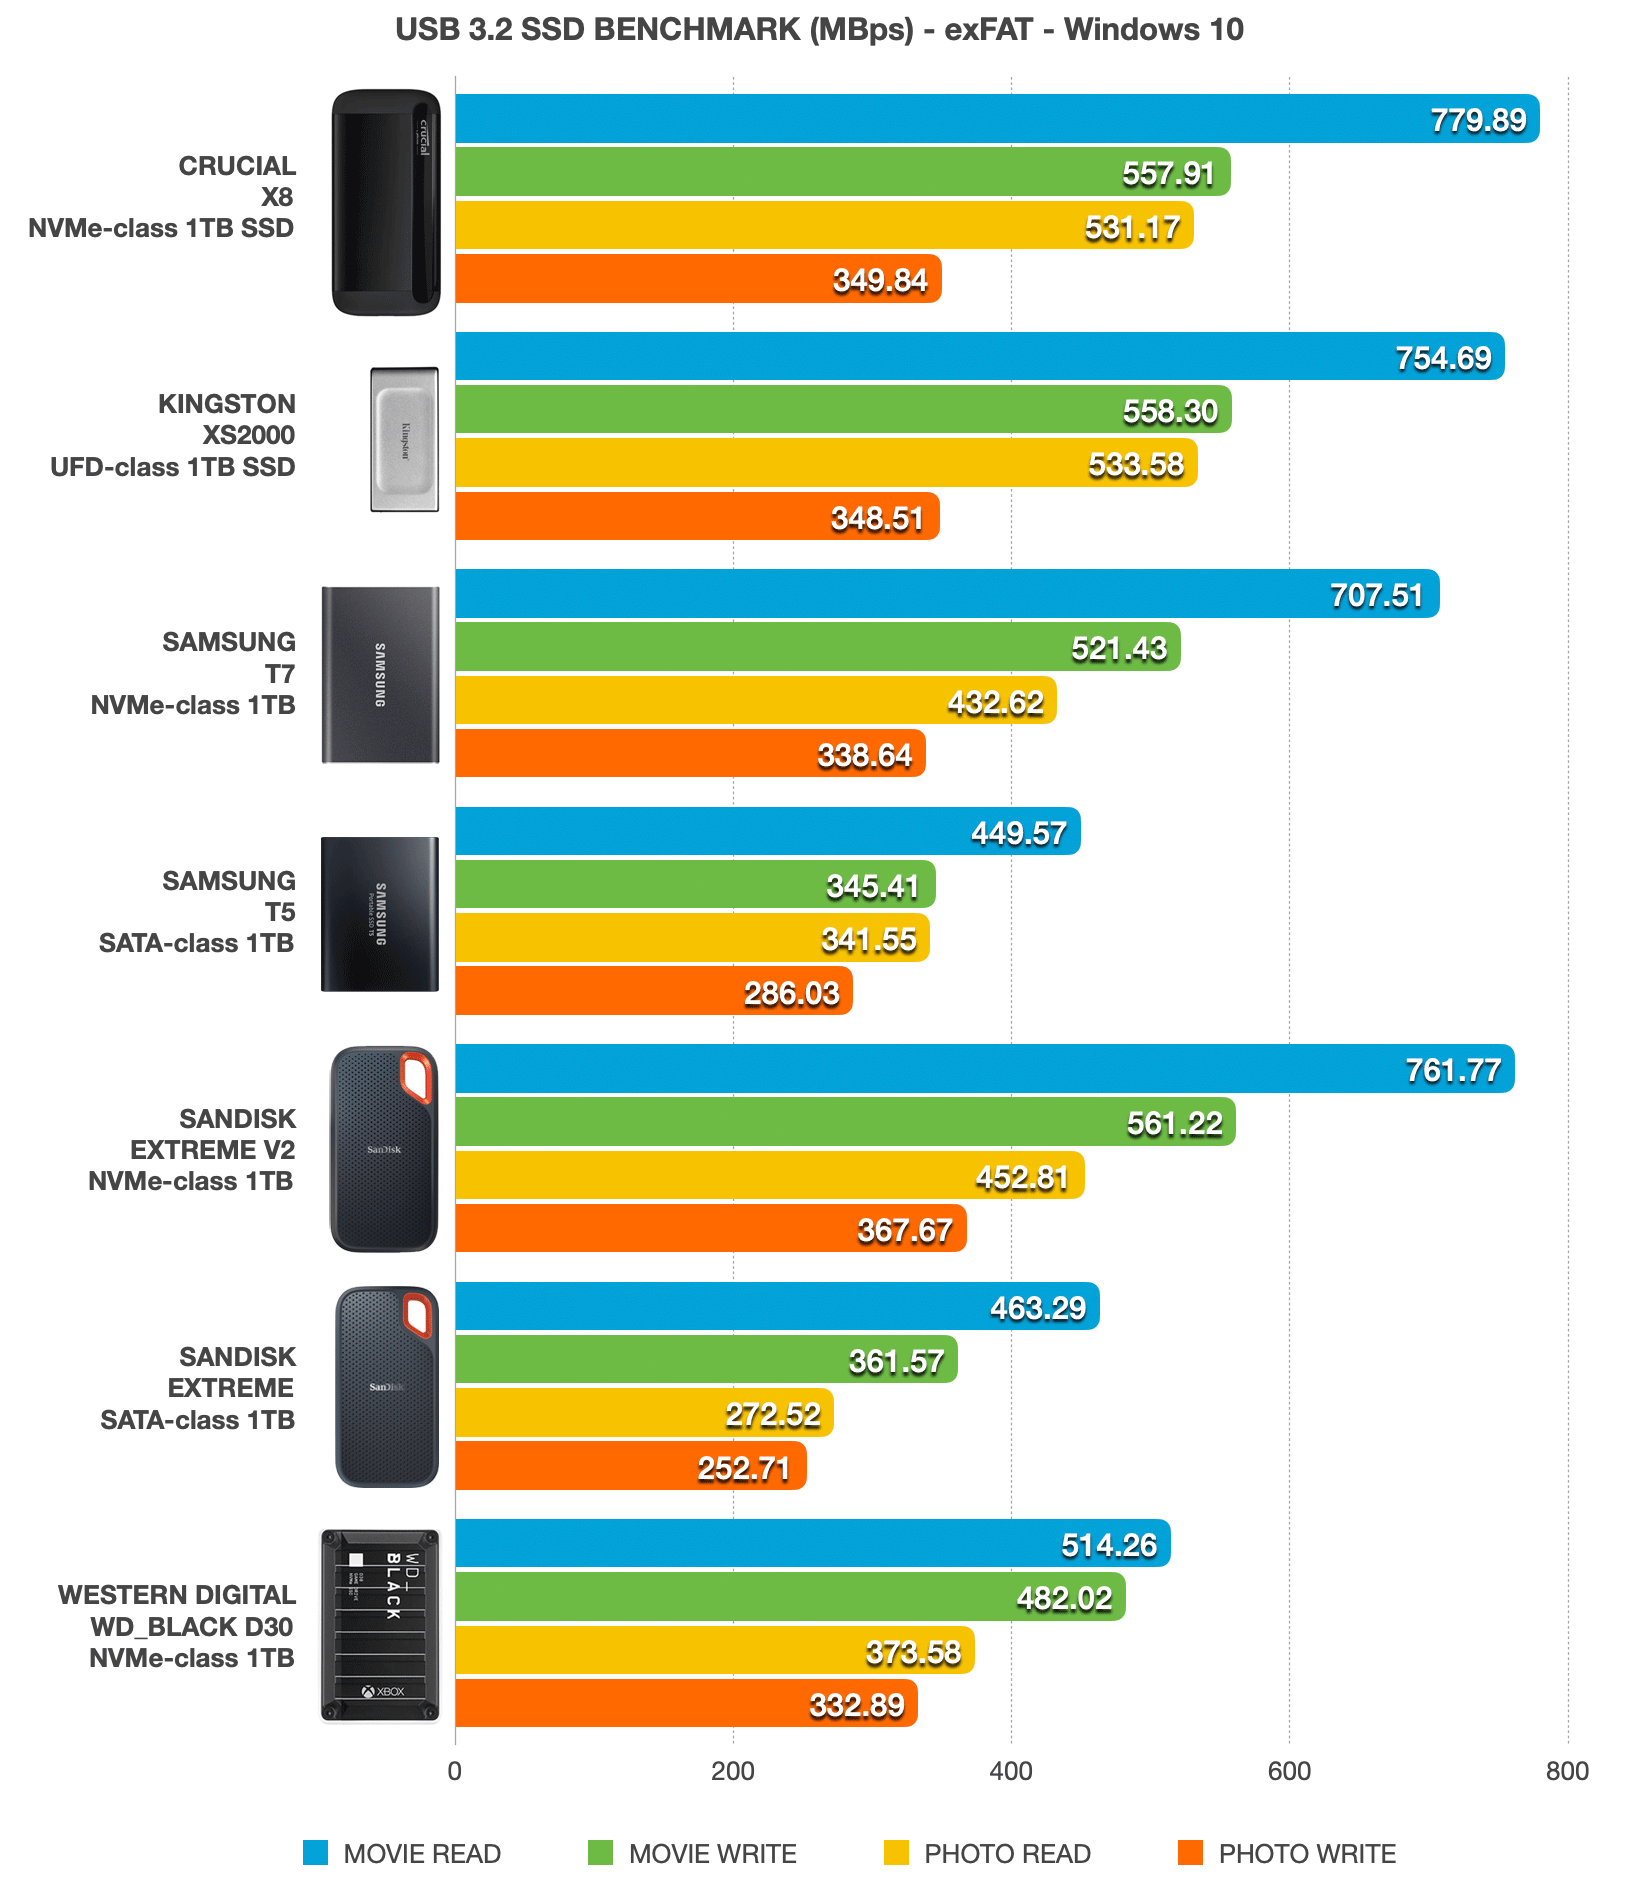 Bar chart comparing USB speeds between Crucial X8, Kingston XS2000, Samsung T7, Sandisk Extreme V2, Western Digital WD_BLACK D30 on Windows 10.